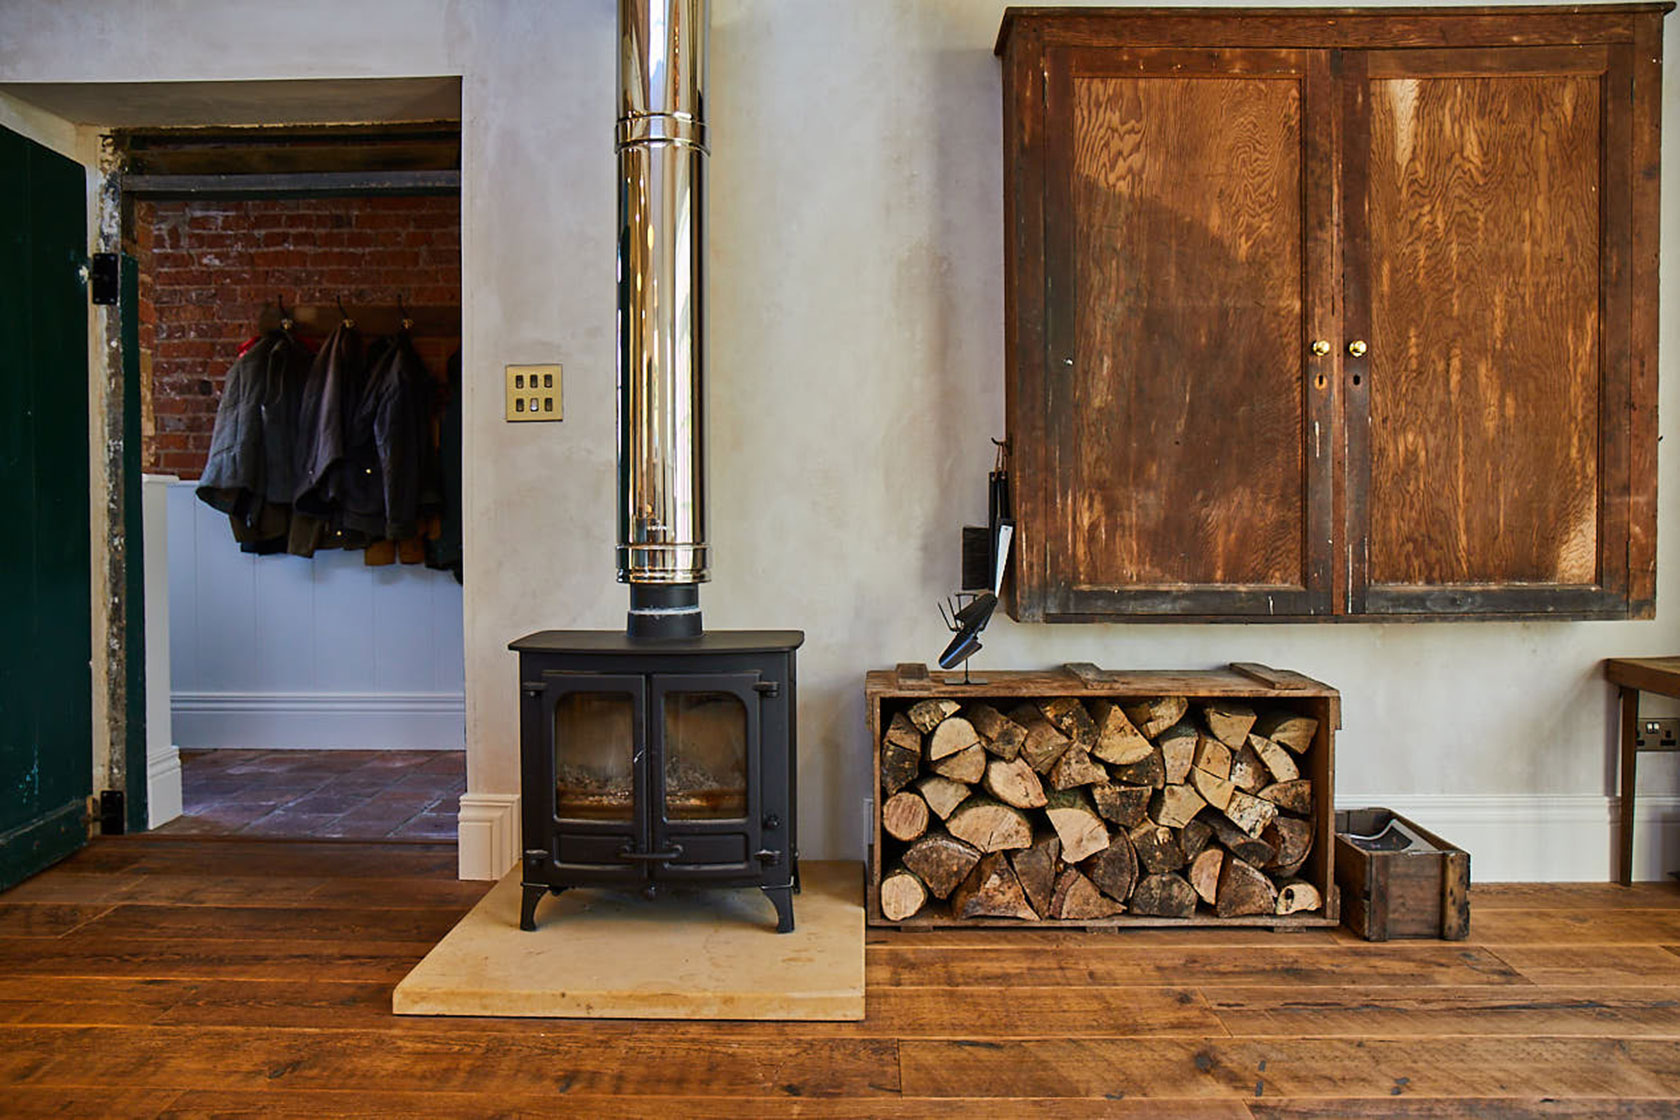 Rustic log burner sits on reclaimed floorboards with logs in log basket